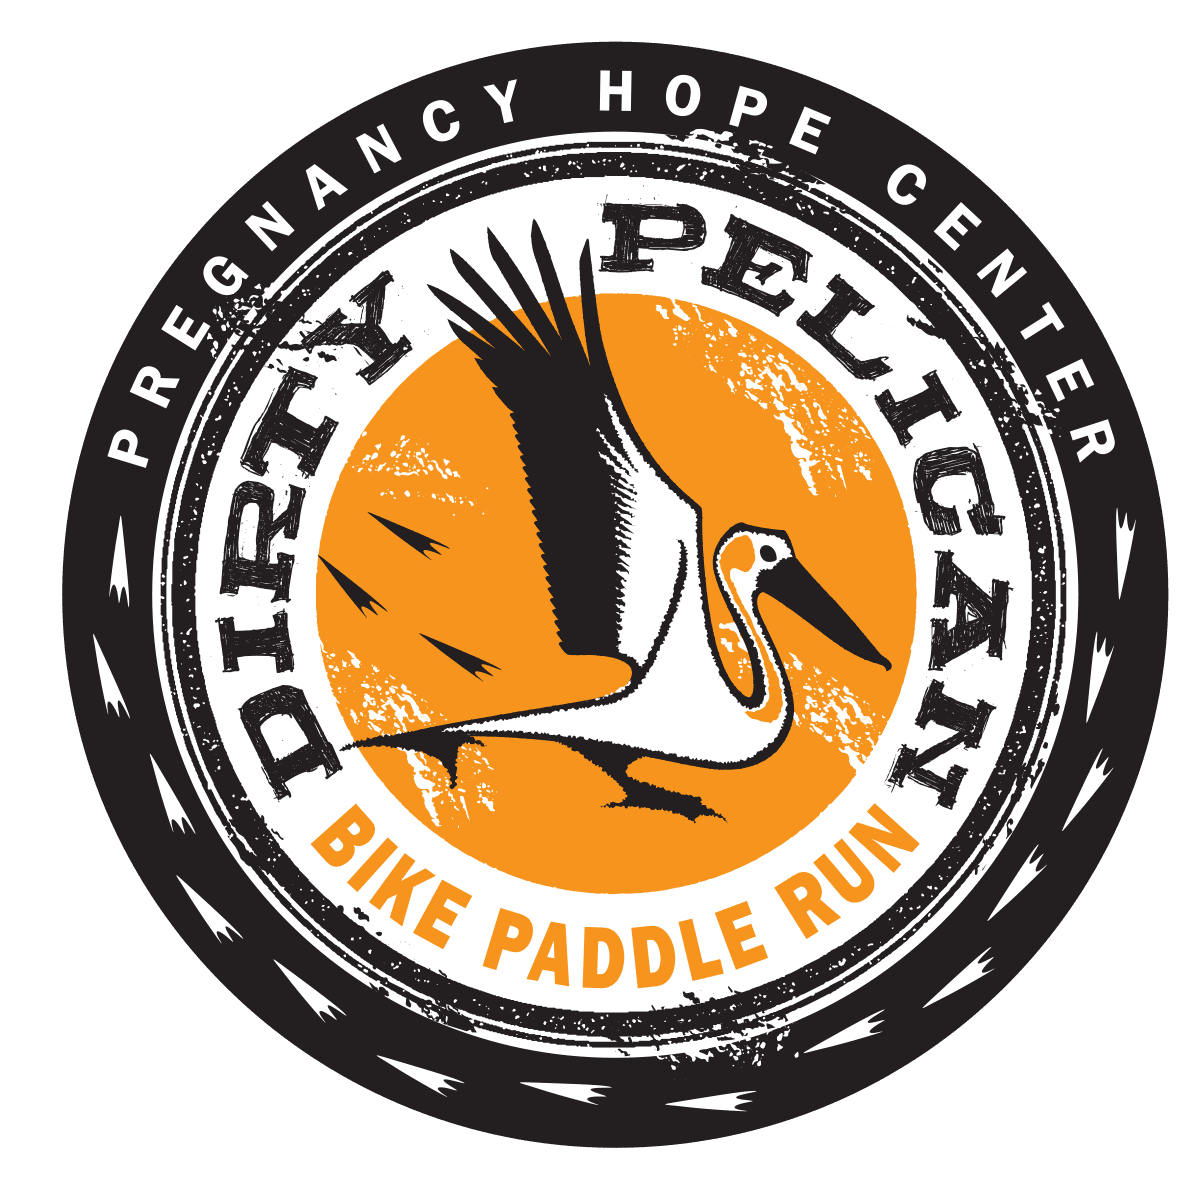 Dirty Pelican Bike Paddle Run logo on RaceRaves